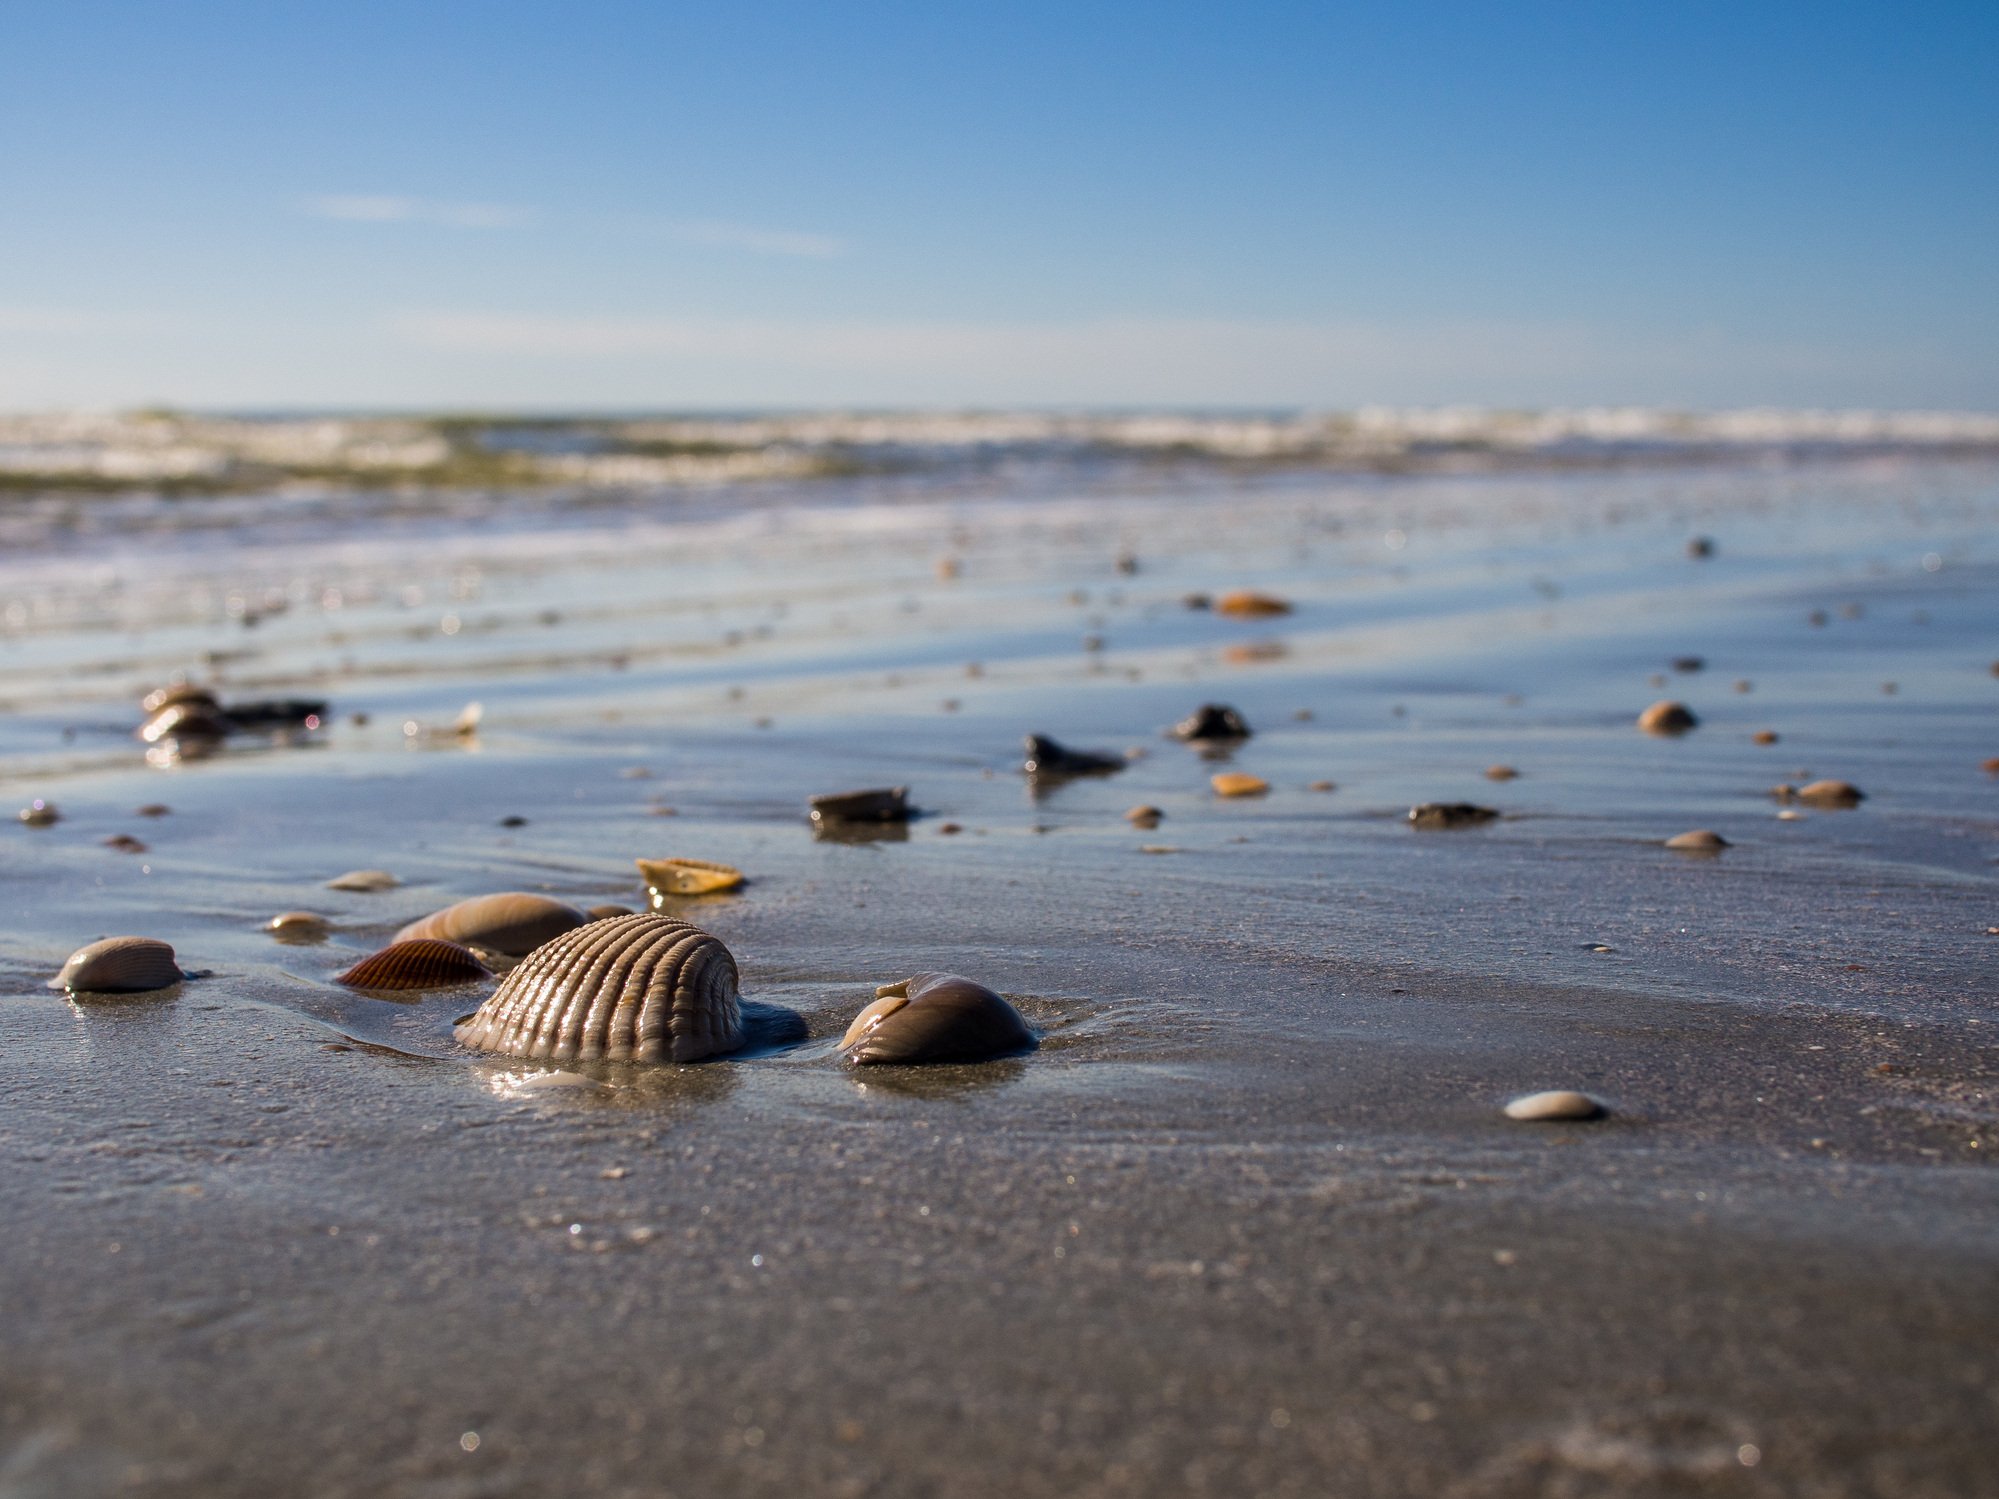 shells scattered across a seaside beach